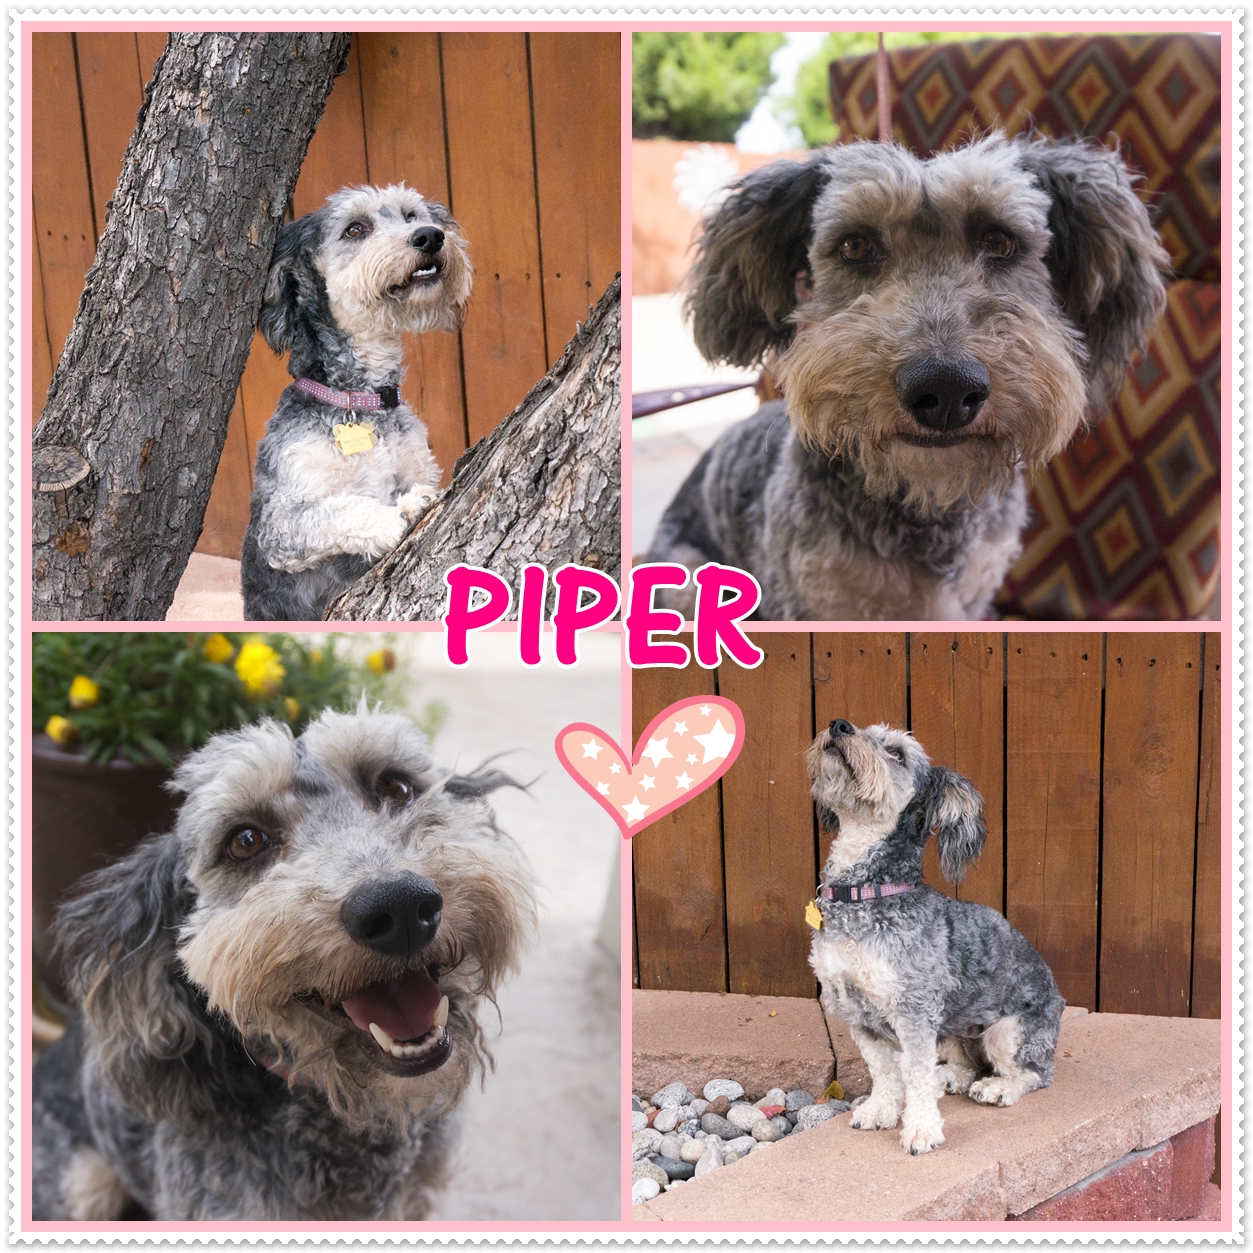 Piper (Schnauzer / Bichon Frise for adoption)